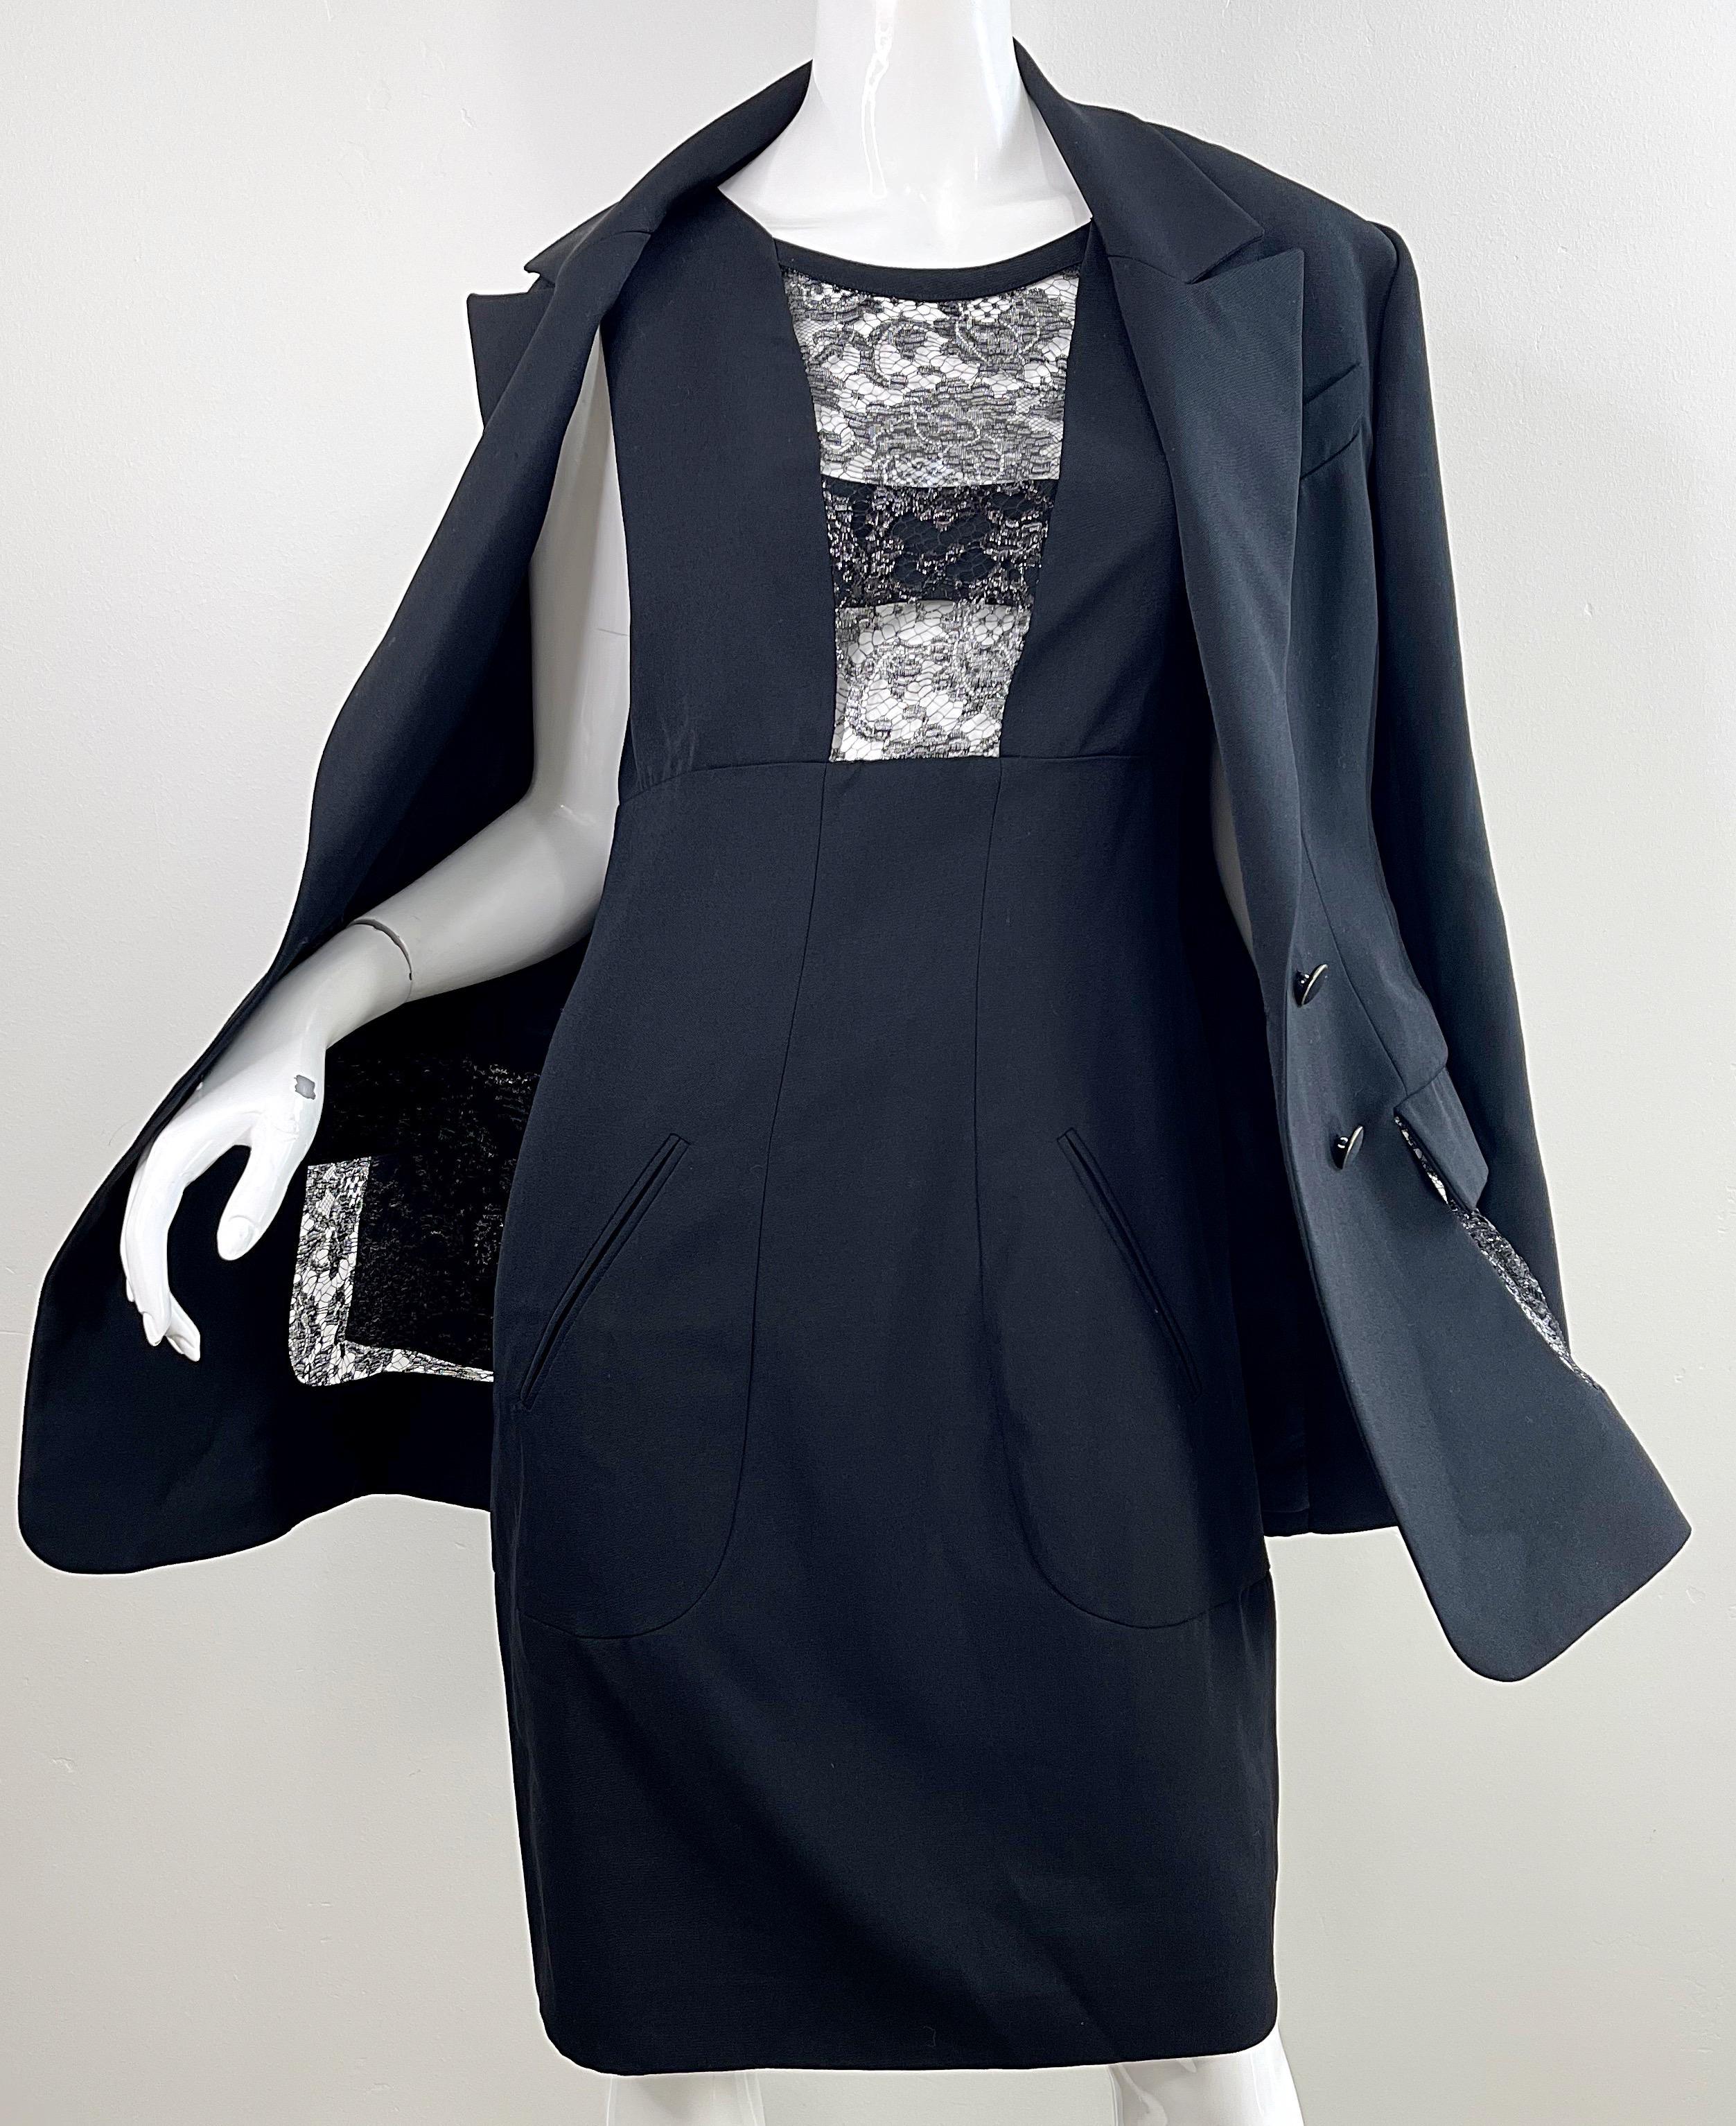 Karl Lagerfeld 1980s Black Lace Cut - Out Size 44 / 10 12 Vintage Dress + Jacket For Sale 7